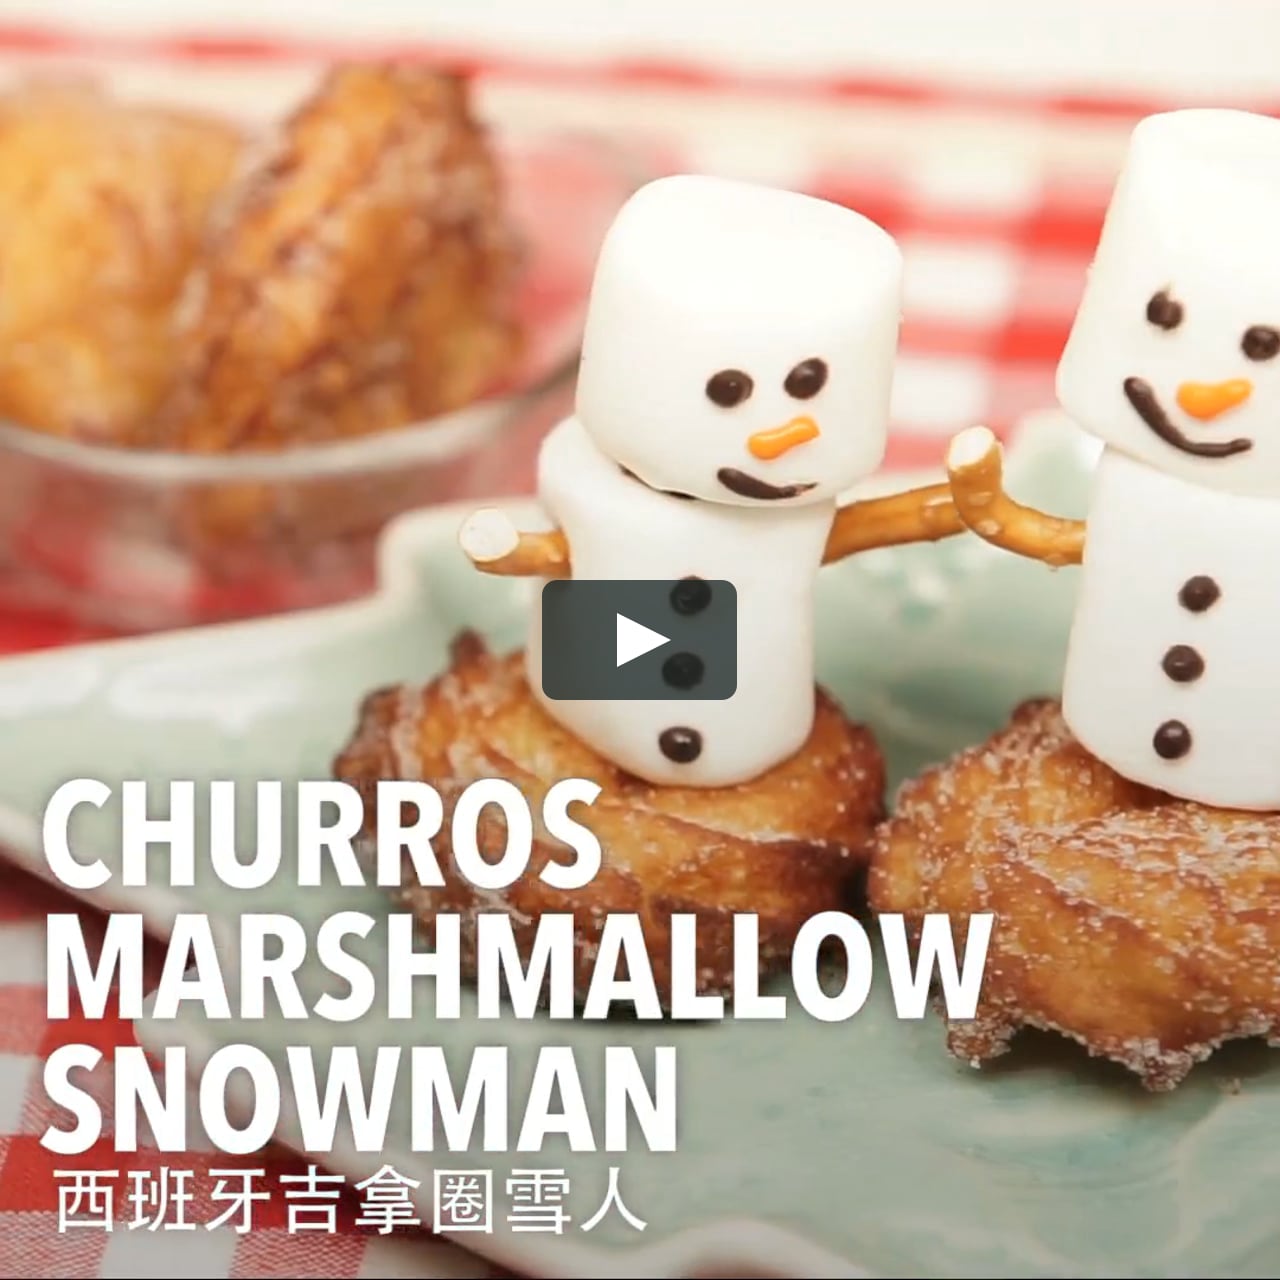 President Churros Snowman Version On Vimeo